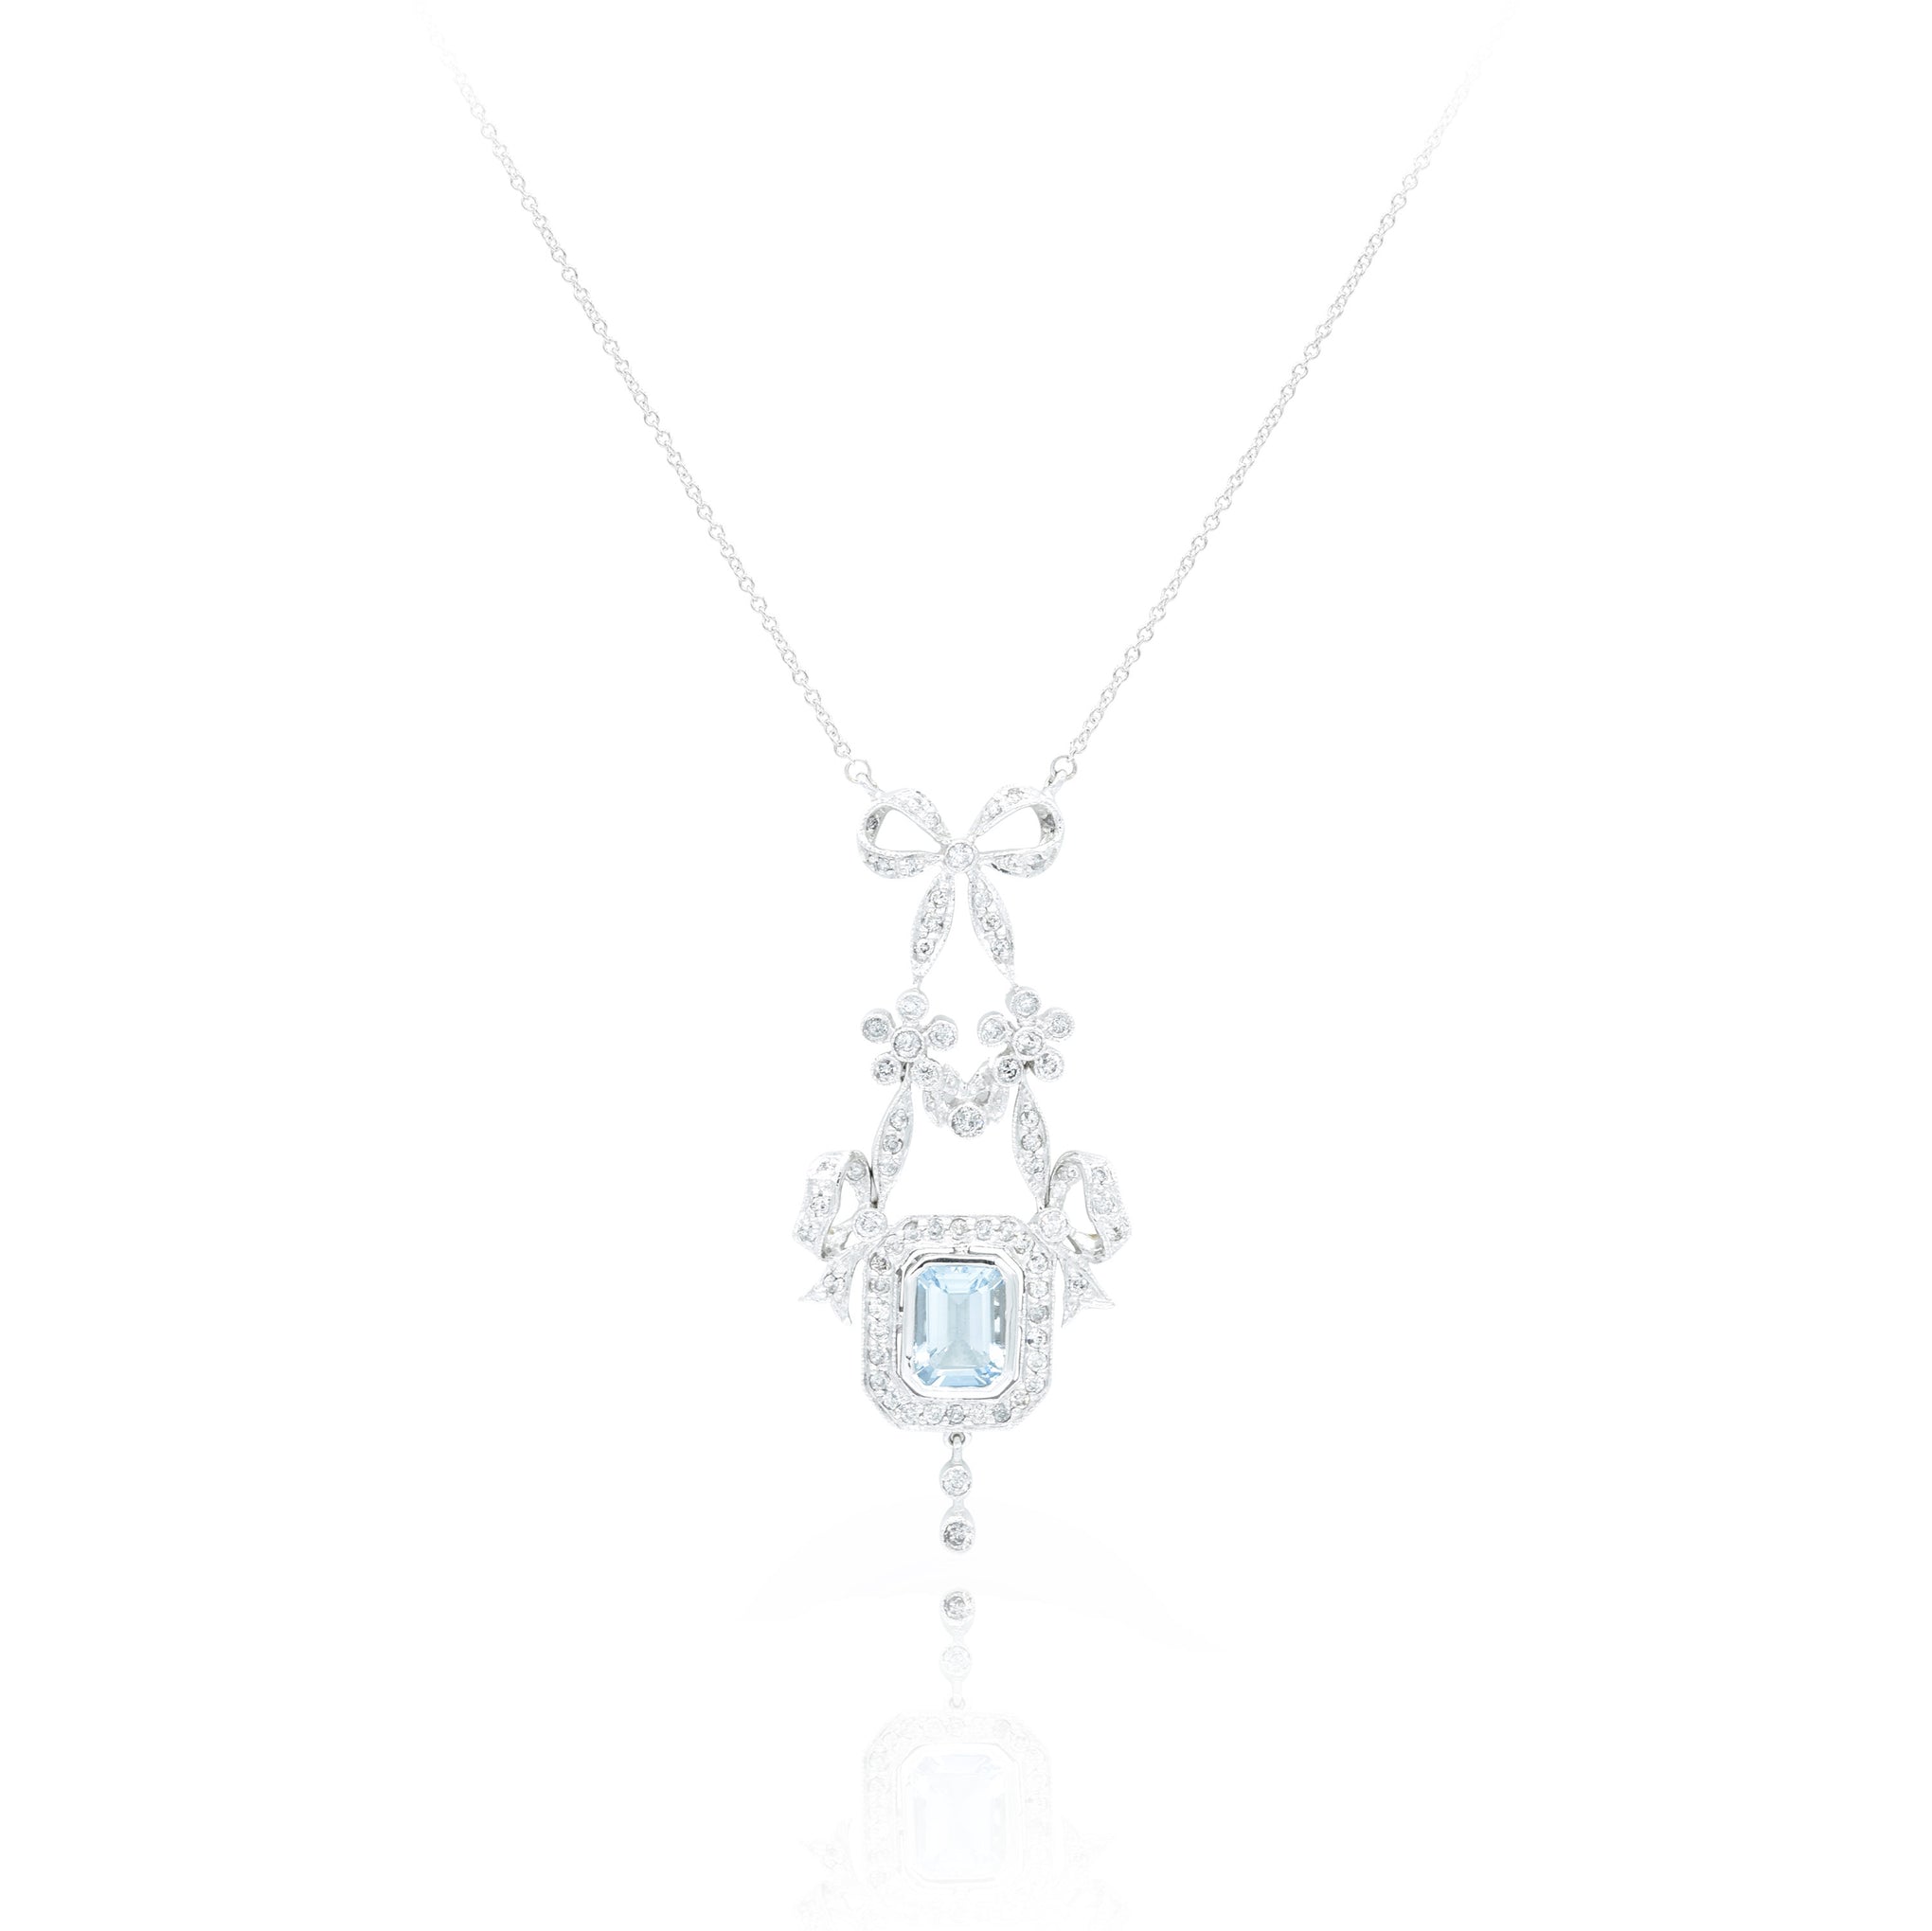 18kt White Gold Diamond and Aquamarine Necklace